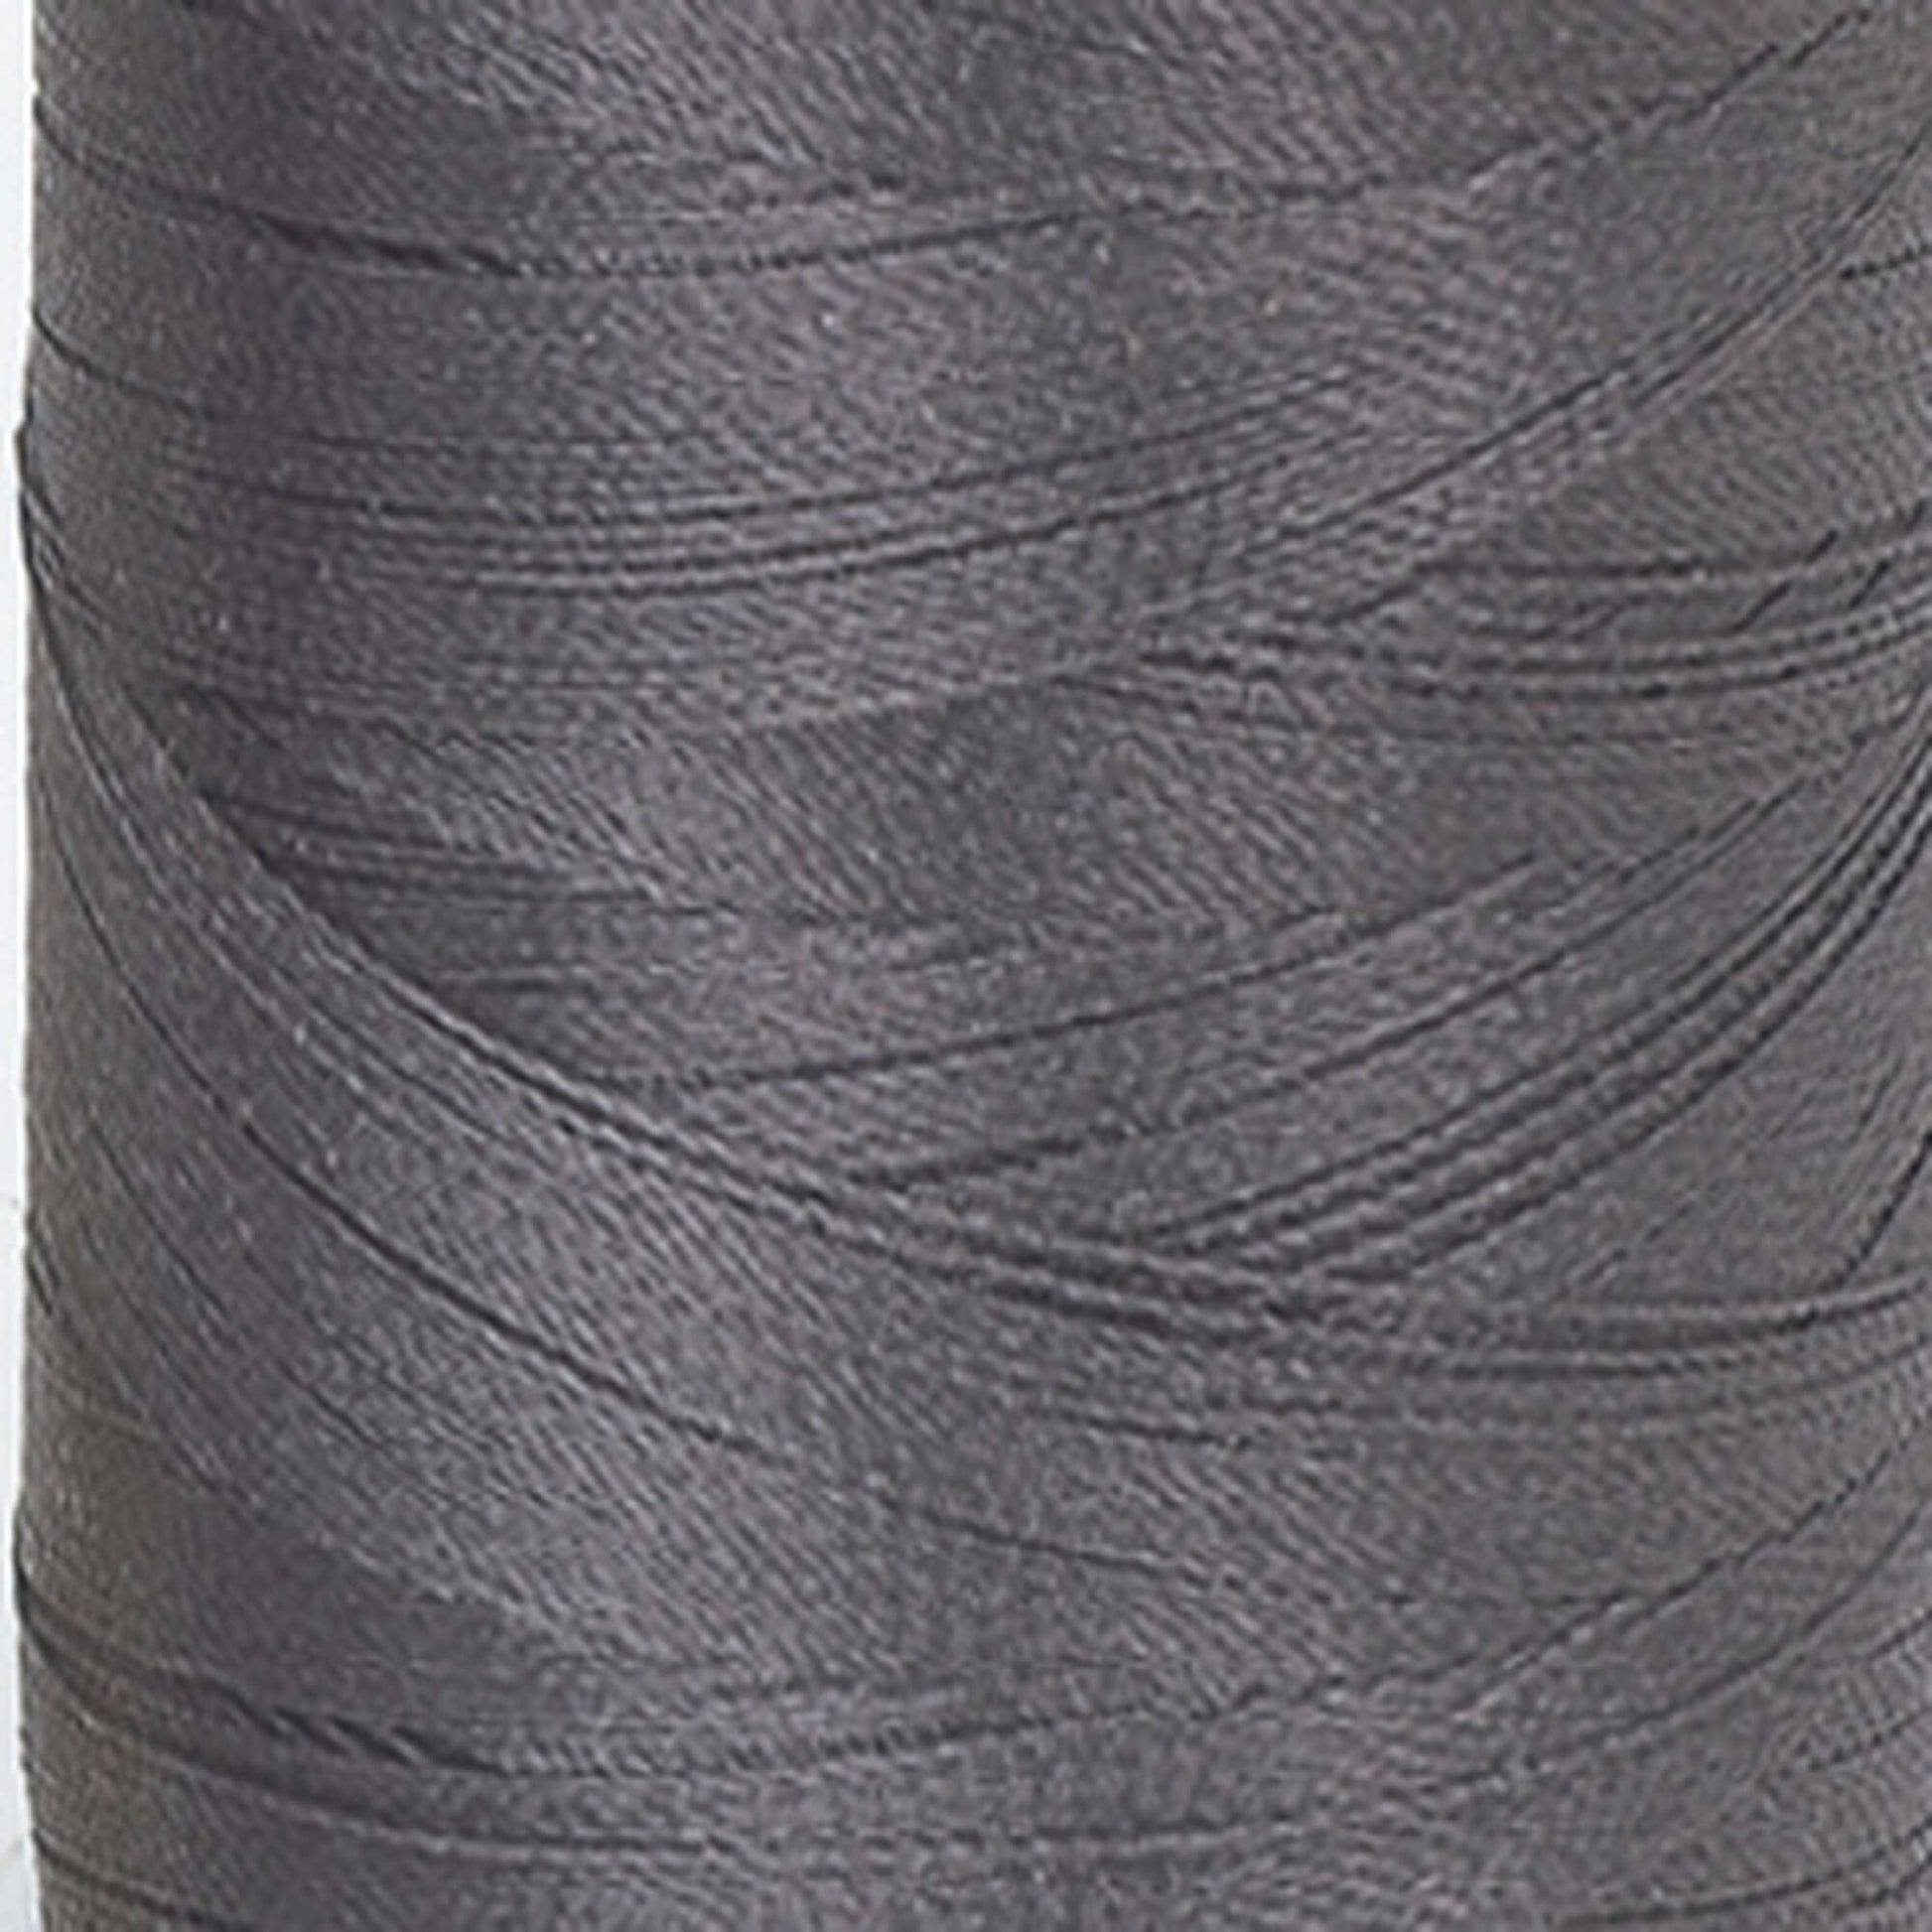 Coats & Clark Machine Embroidery Thread (1100 Yards) Flannel